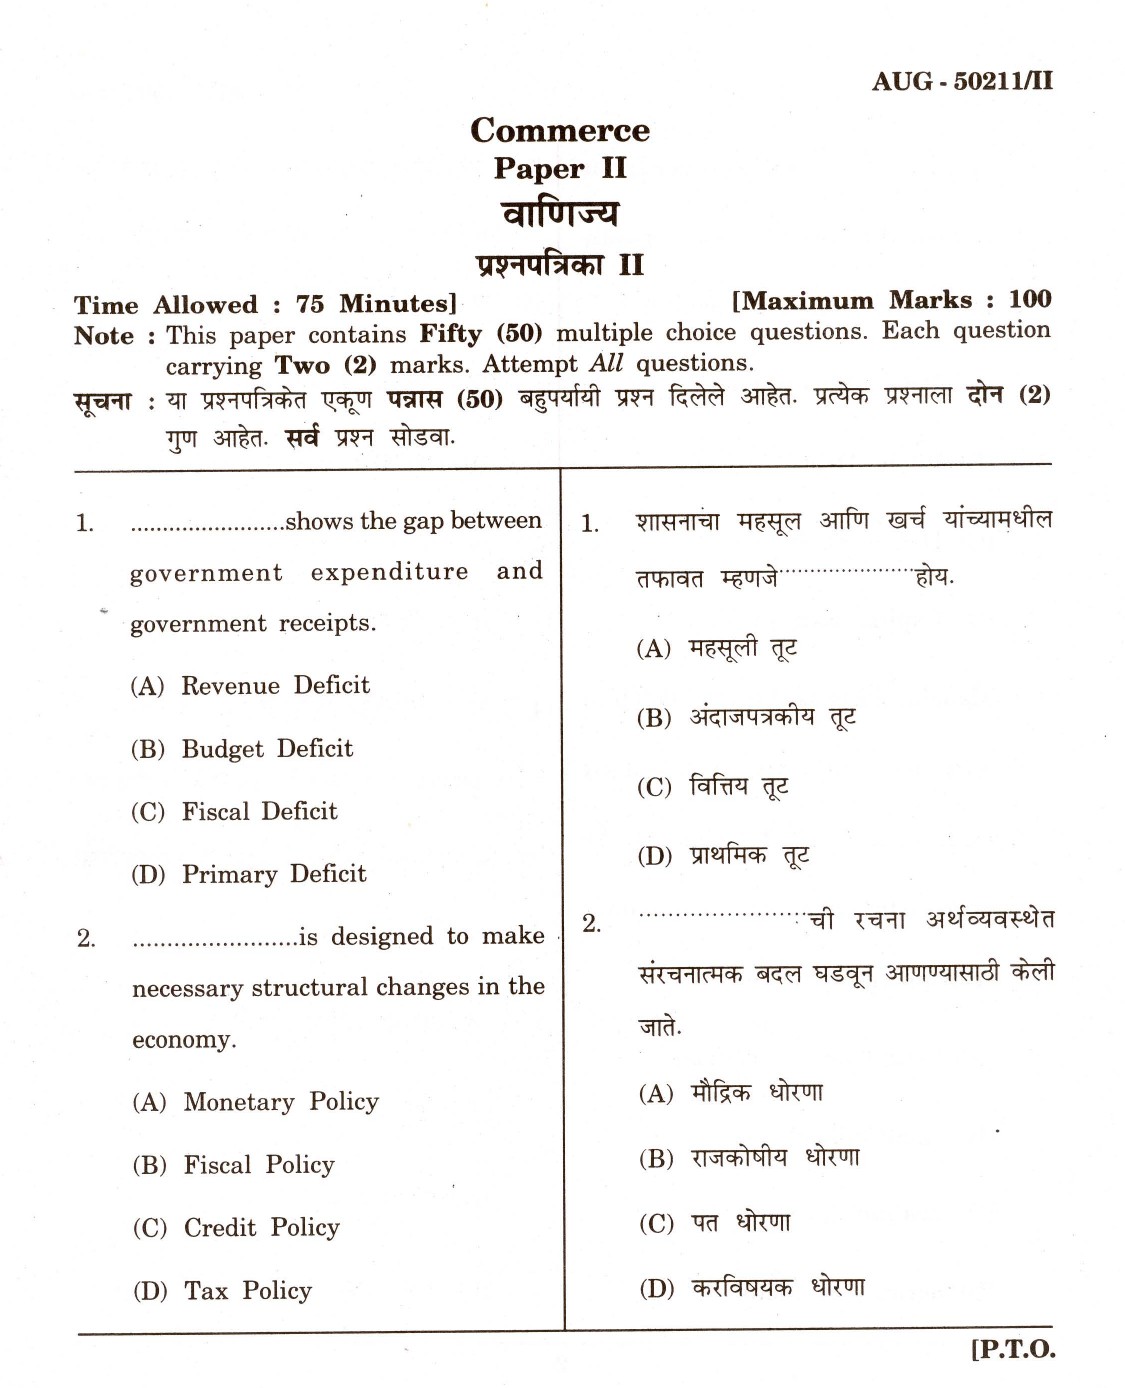 Maharashtra SET Commerce Question Paper II August 2011 1